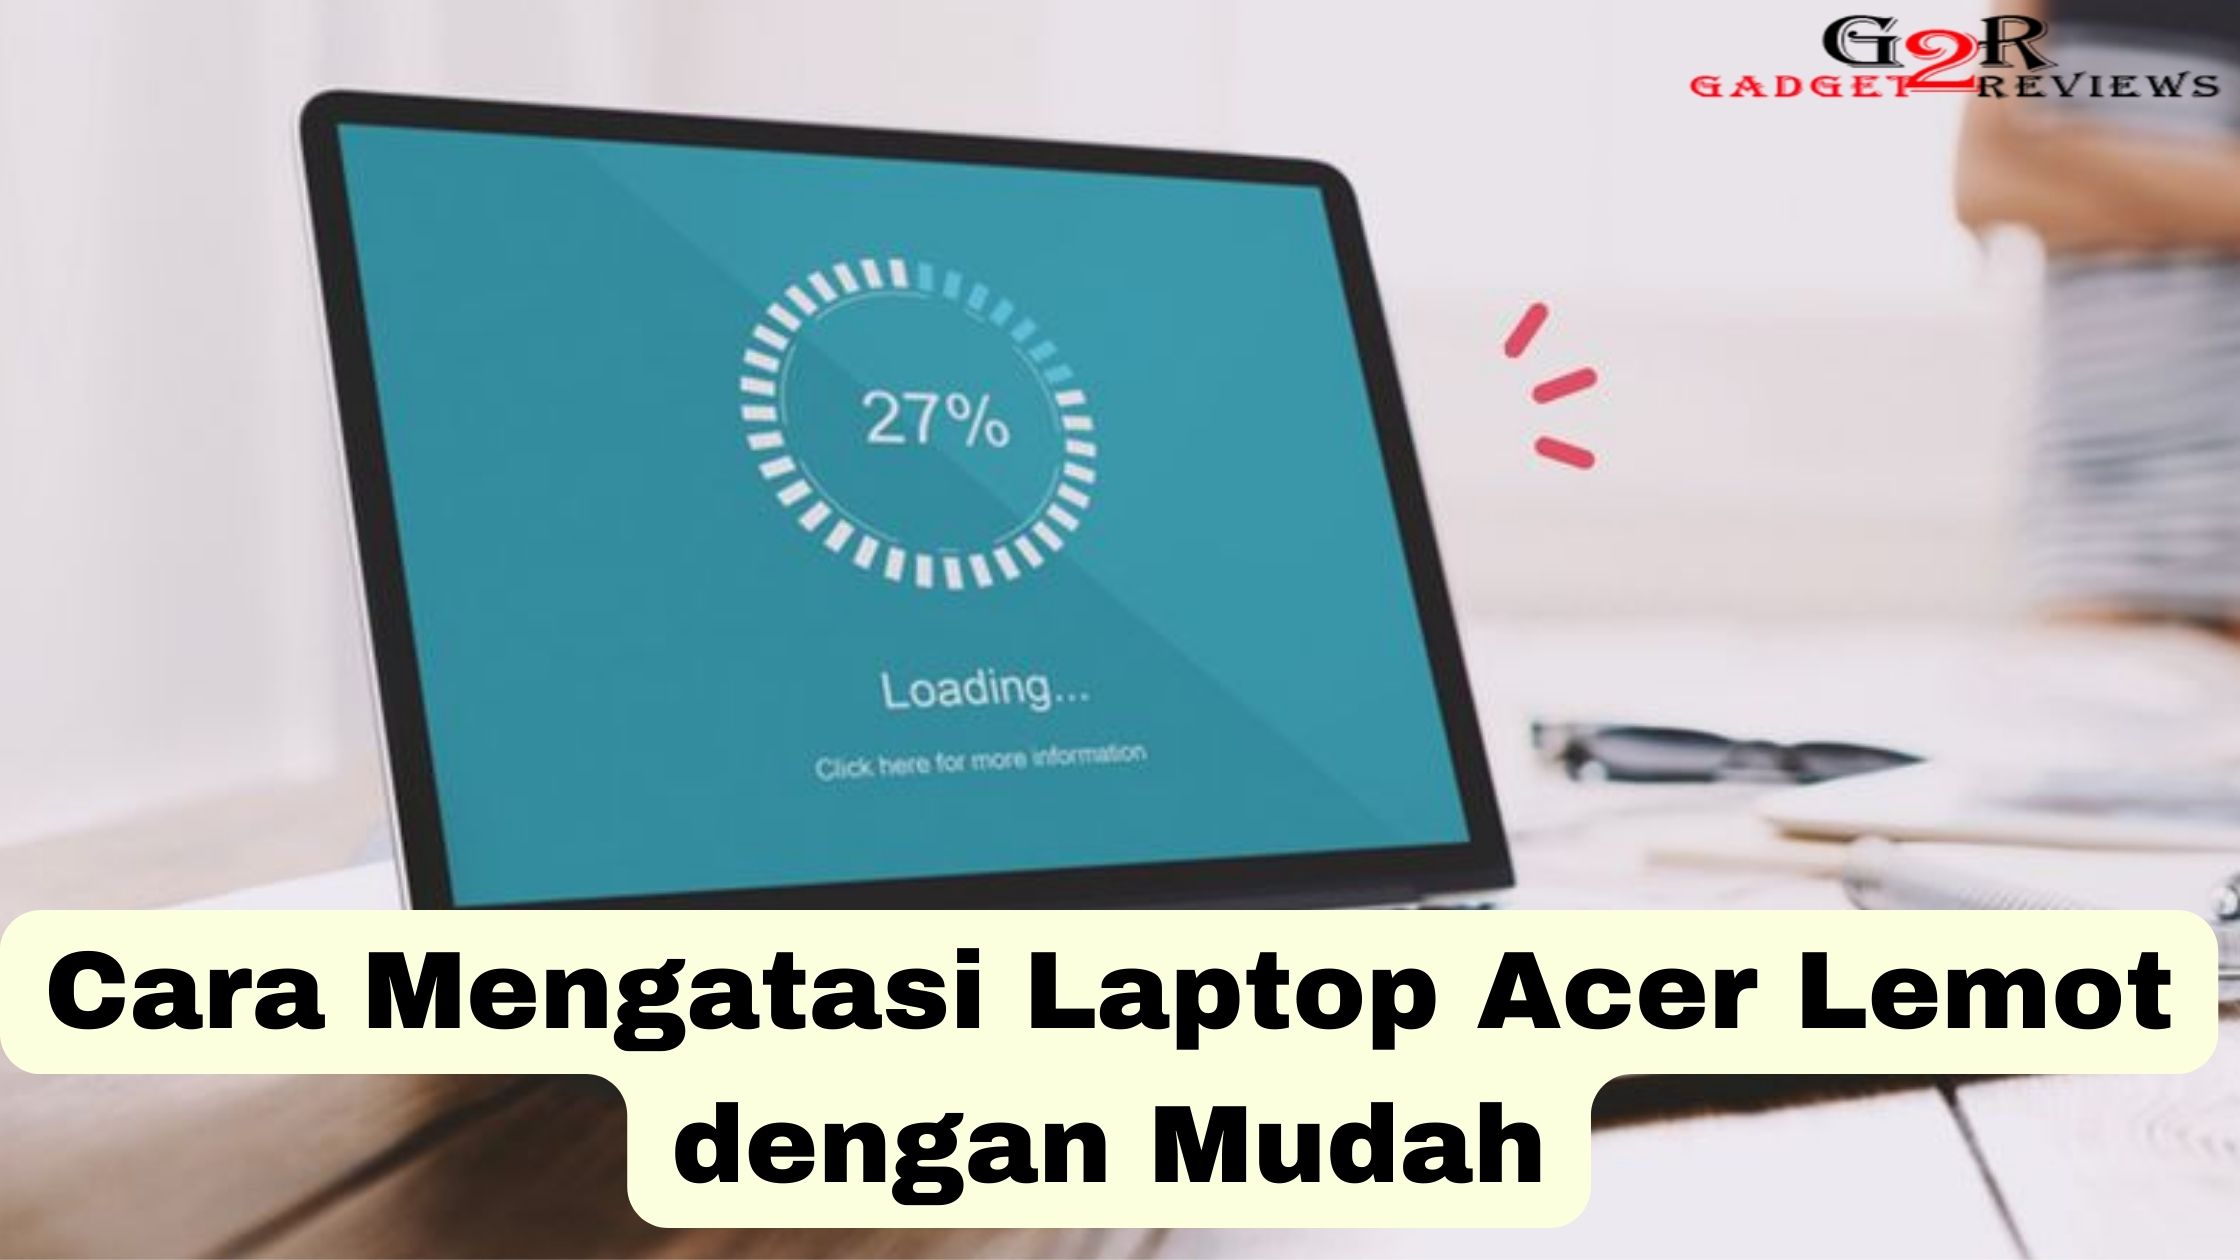 Cara Mengatasi Laptop Acer Lemot